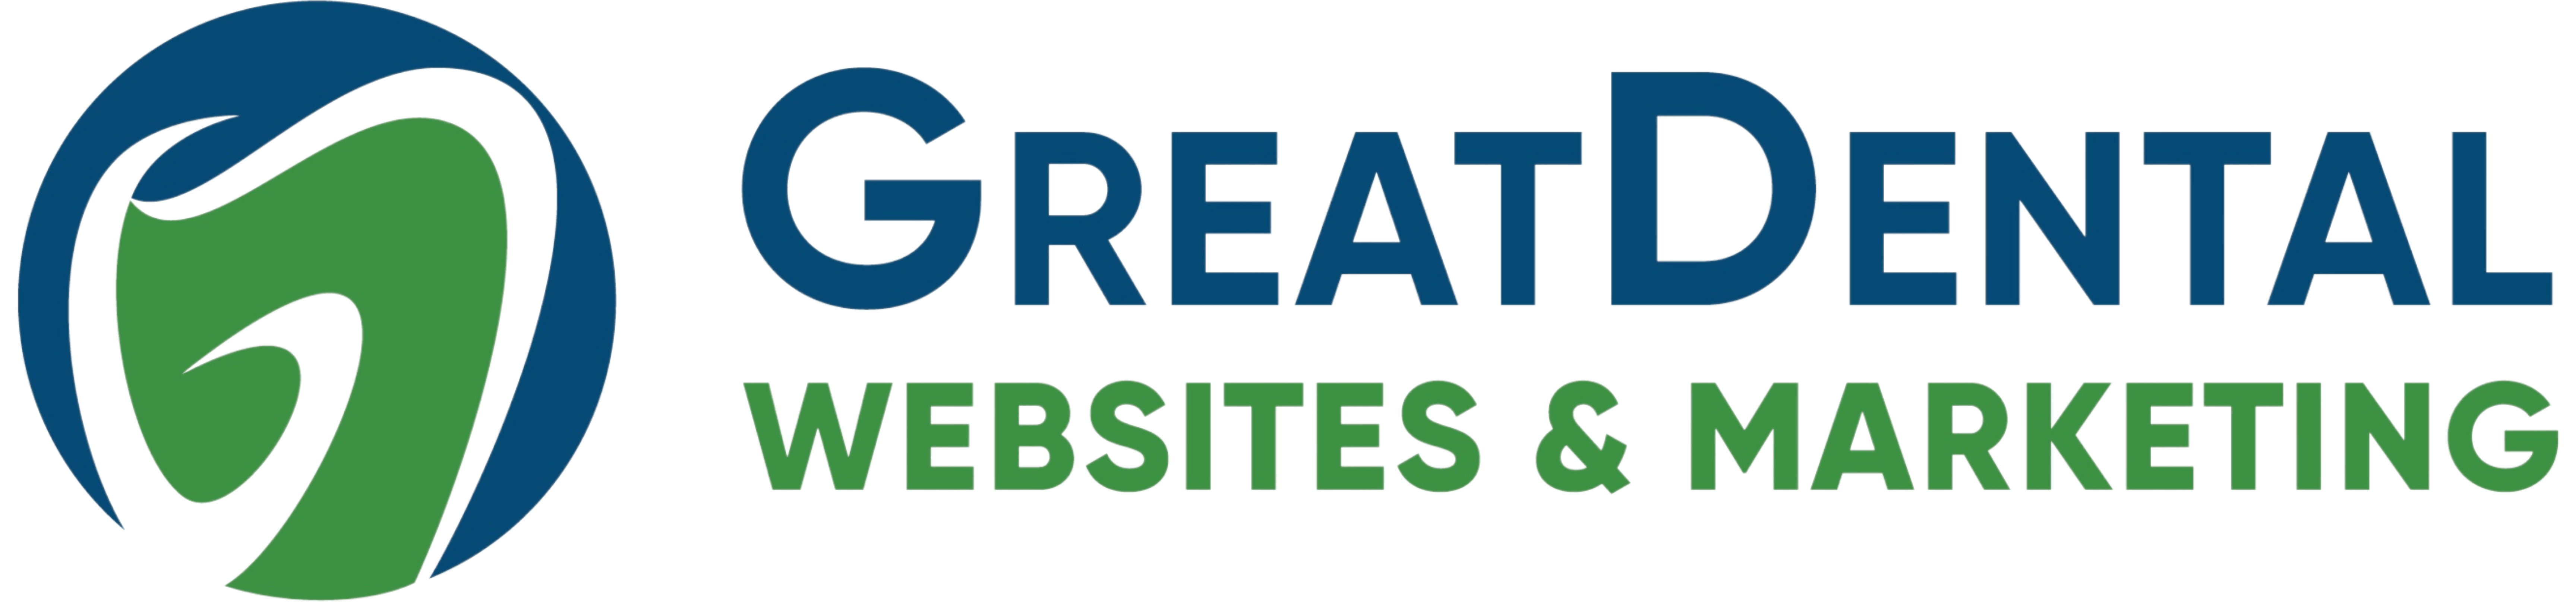 Great Dental Websites Logo -min